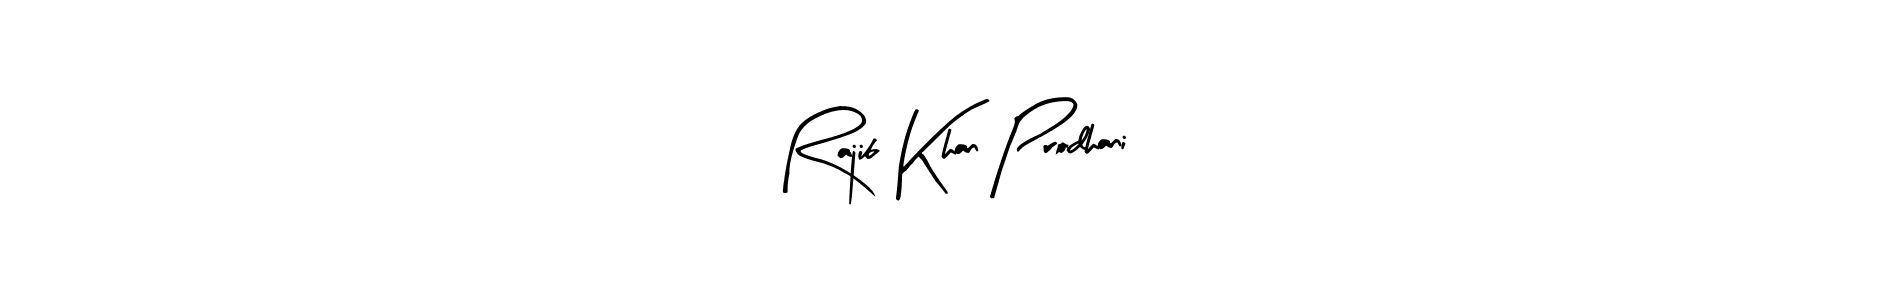 How to Draw Rajib Khan Prodhani signature style? Arty Signature is a latest design signature styles for name Rajib Khan Prodhani. Rajib Khan Prodhani signature style 8 images and pictures png